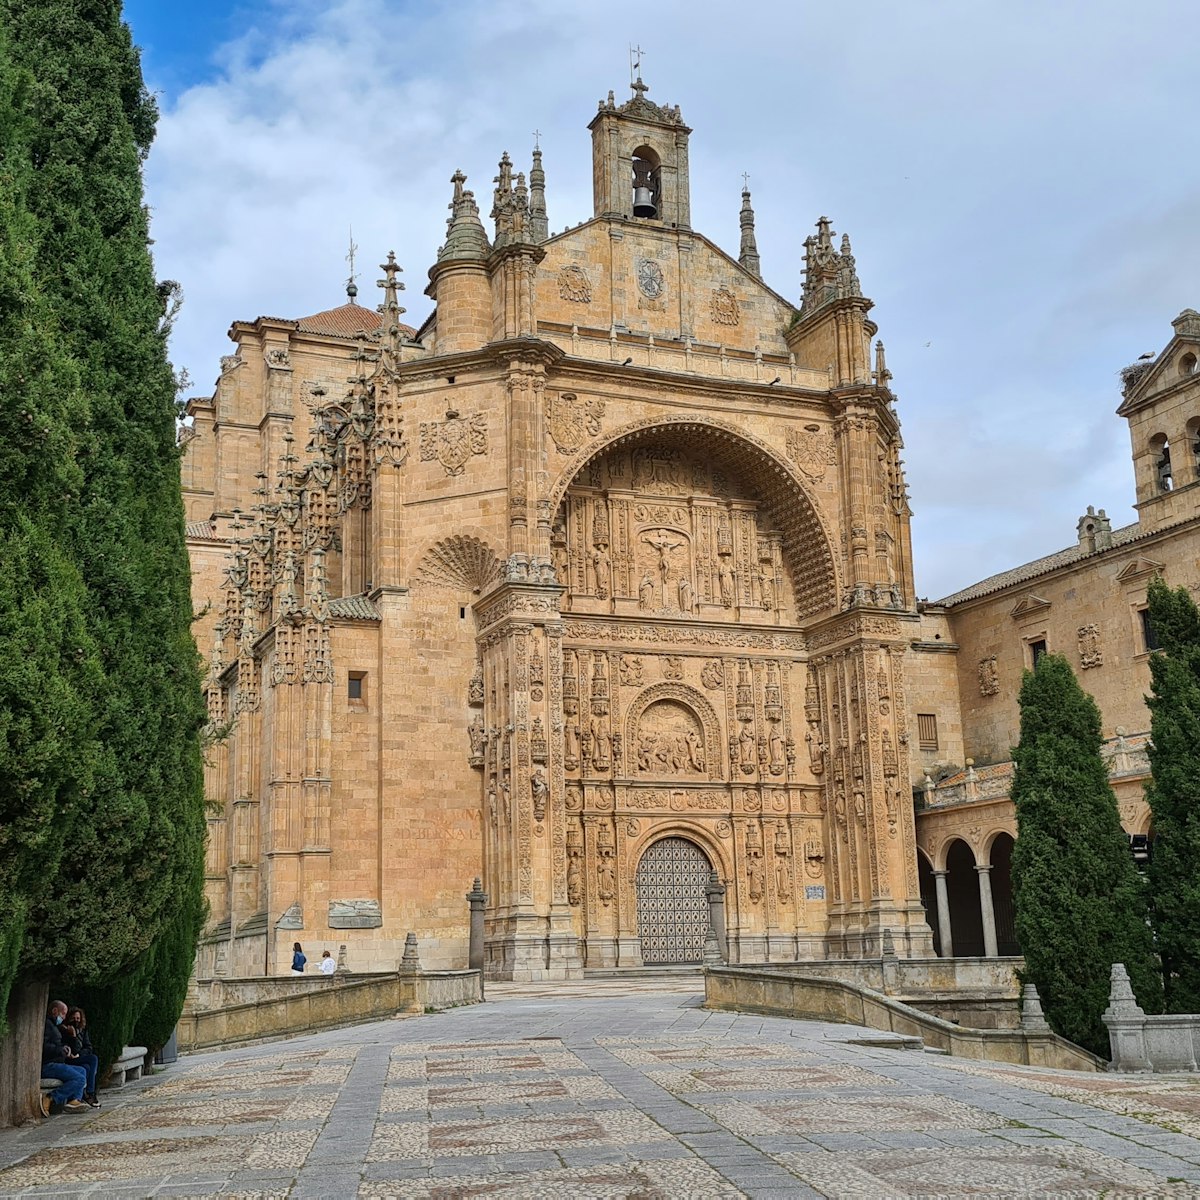 Façade of San Esteban Convent in Salamanca.